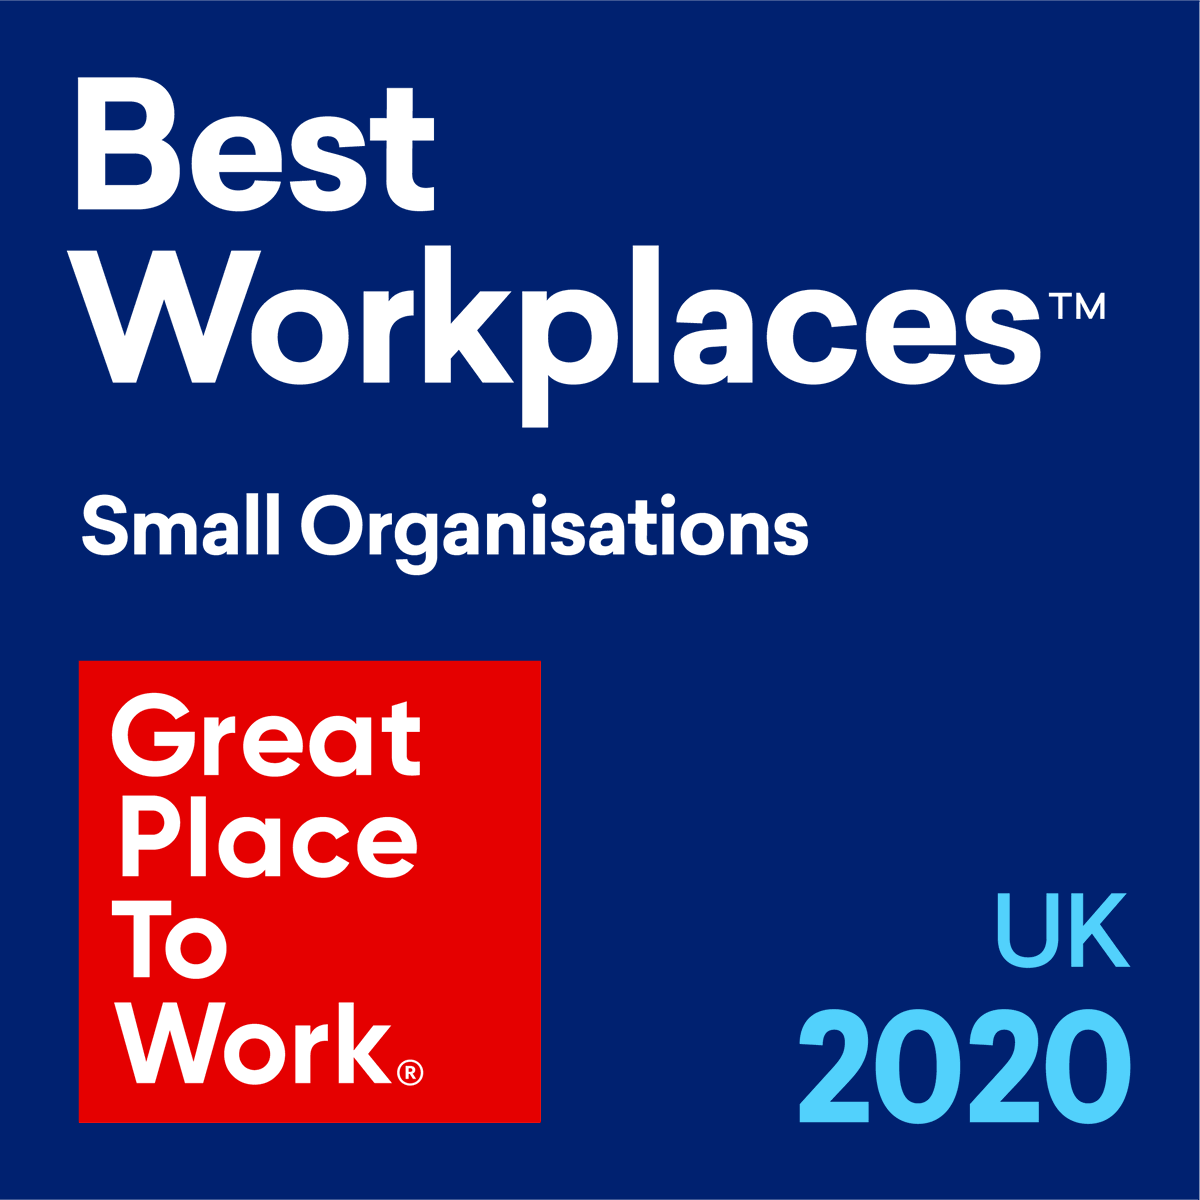 Best Workplaces 2020 award